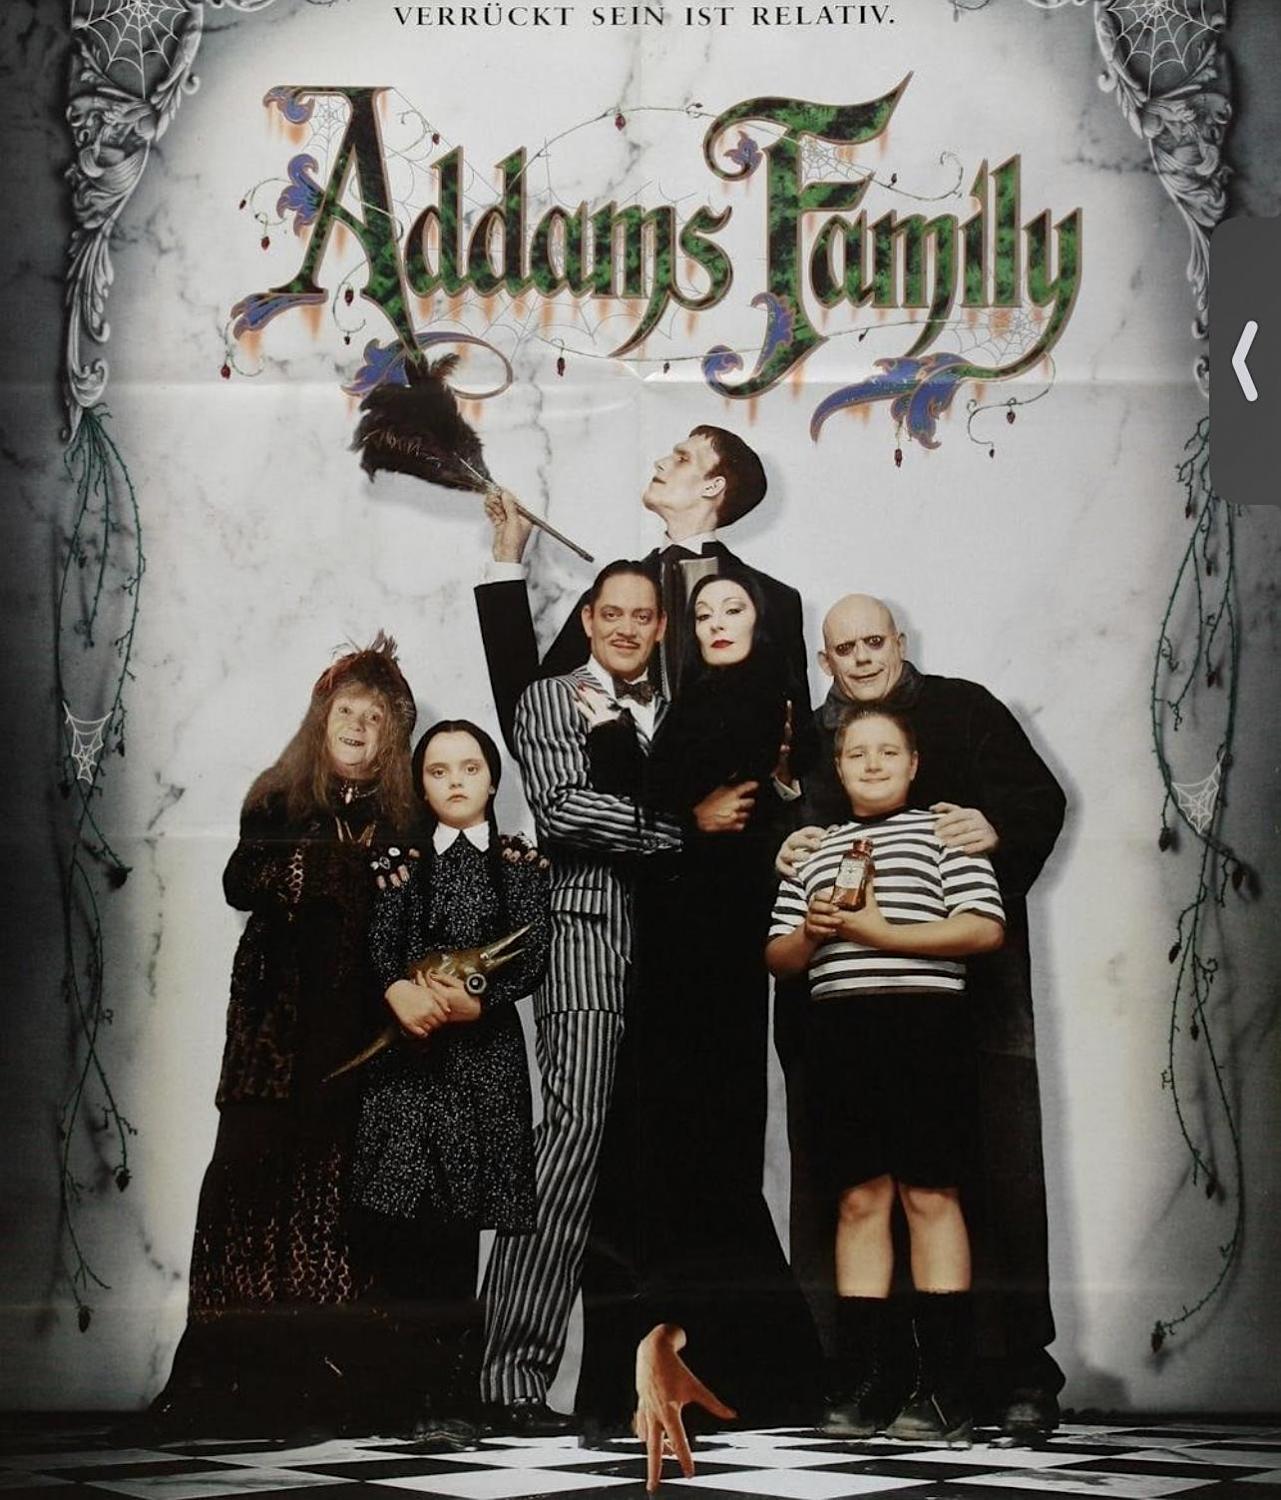 Spooktacular Family Movie Night Series: The Adams Famiily
Fri Oct 7, 6:00 PM - Fri Oct 7, 10:00 PM